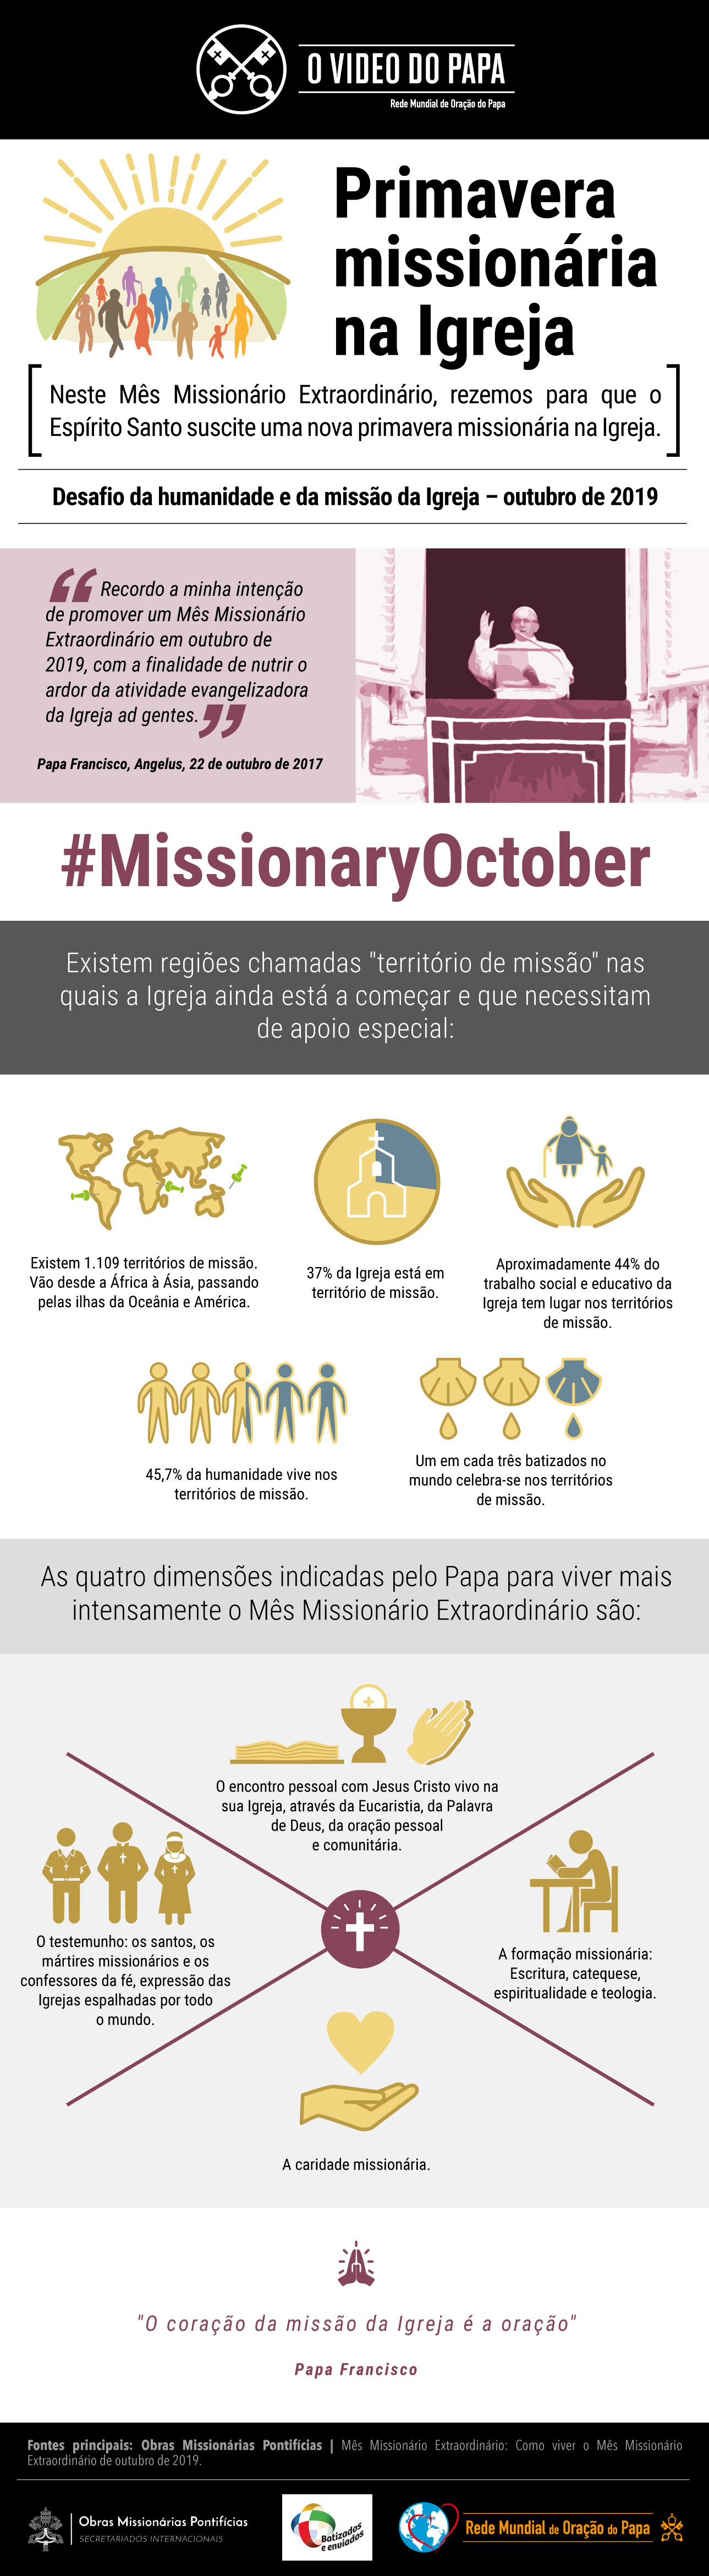 infografia-tpv-10-2019-pt-o-video-do-papa-primavera-missionaria.jpg